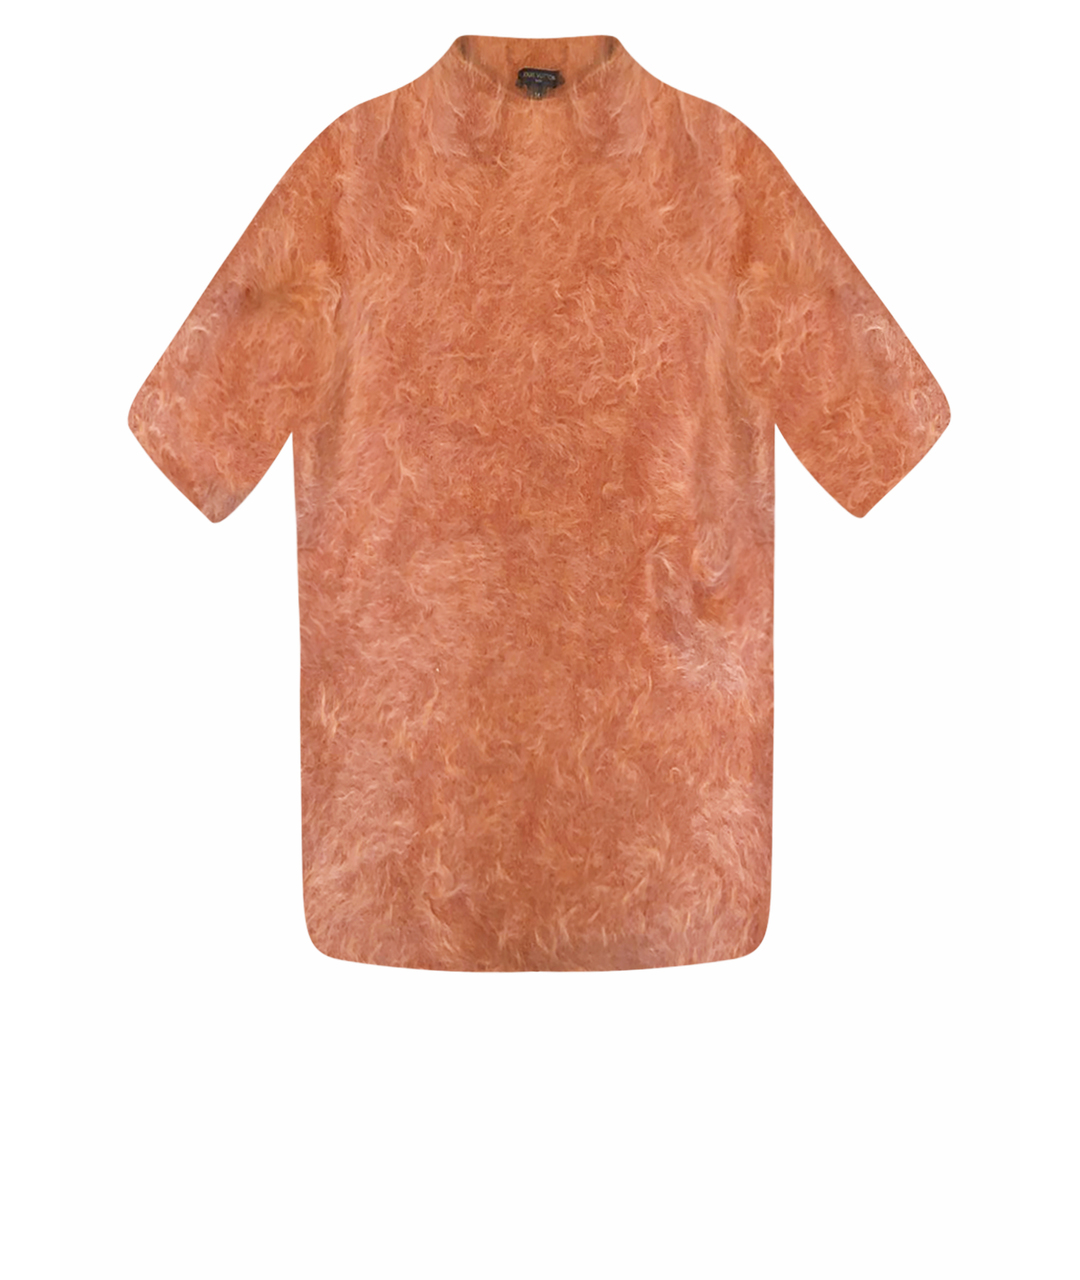 LOUIS VUITTON PRE-OWNED Коралловый меховой джемпер / свитер, фото 1